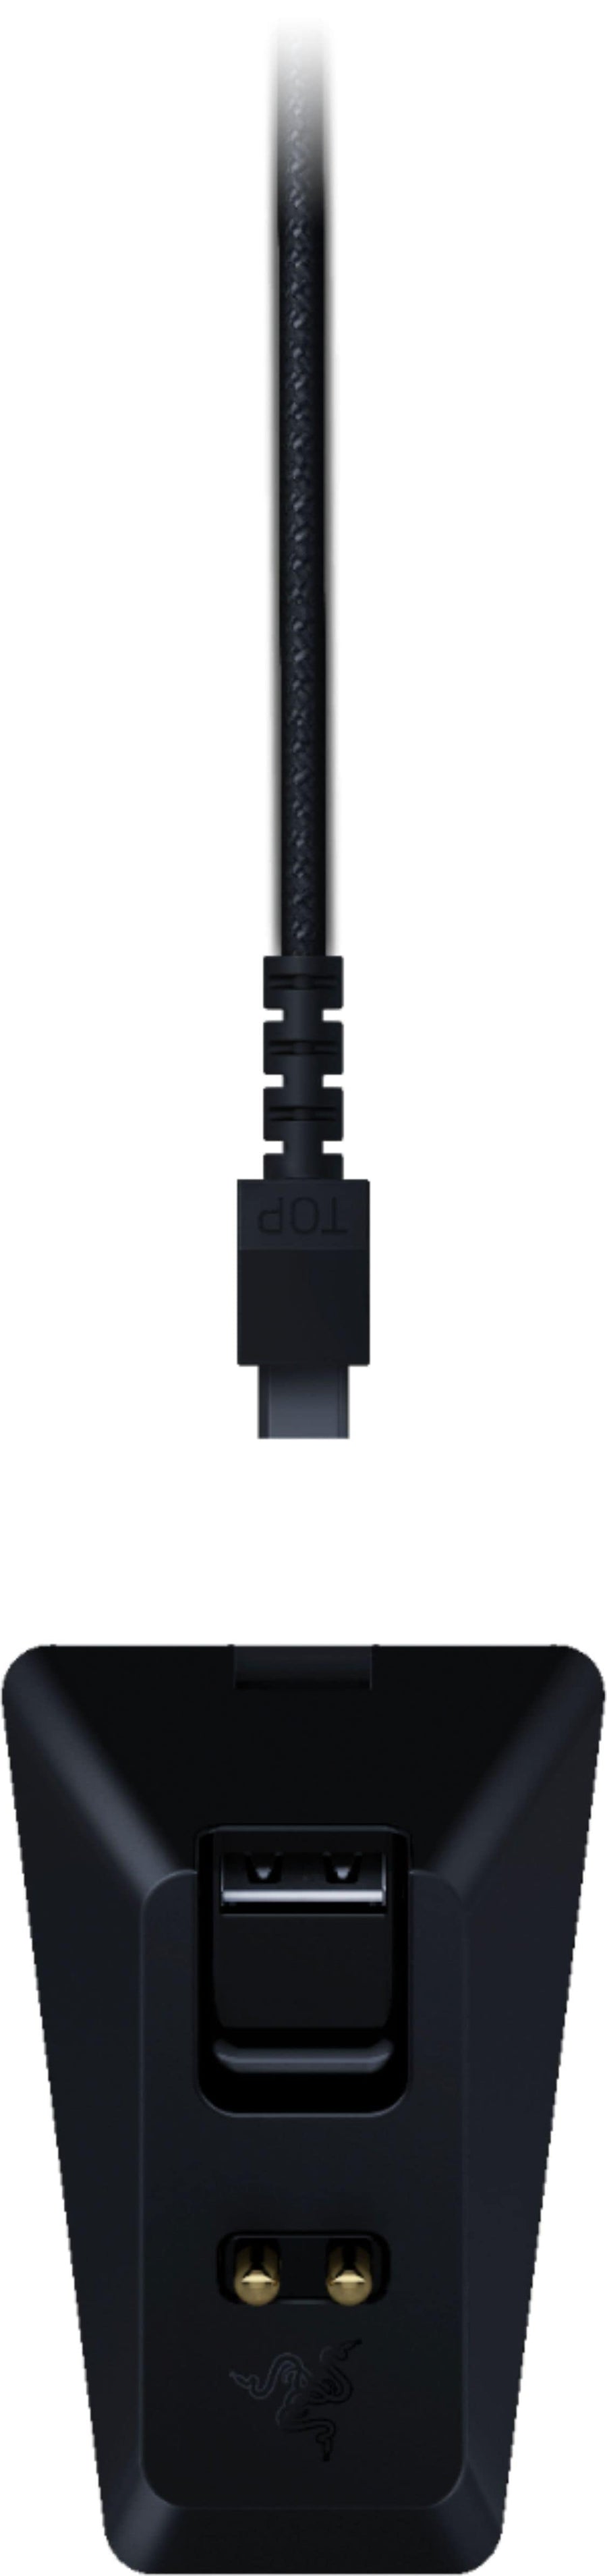 Mouse Dock Chroma: Wireless Charging Dock with Razer Chroma RGB - Black_0